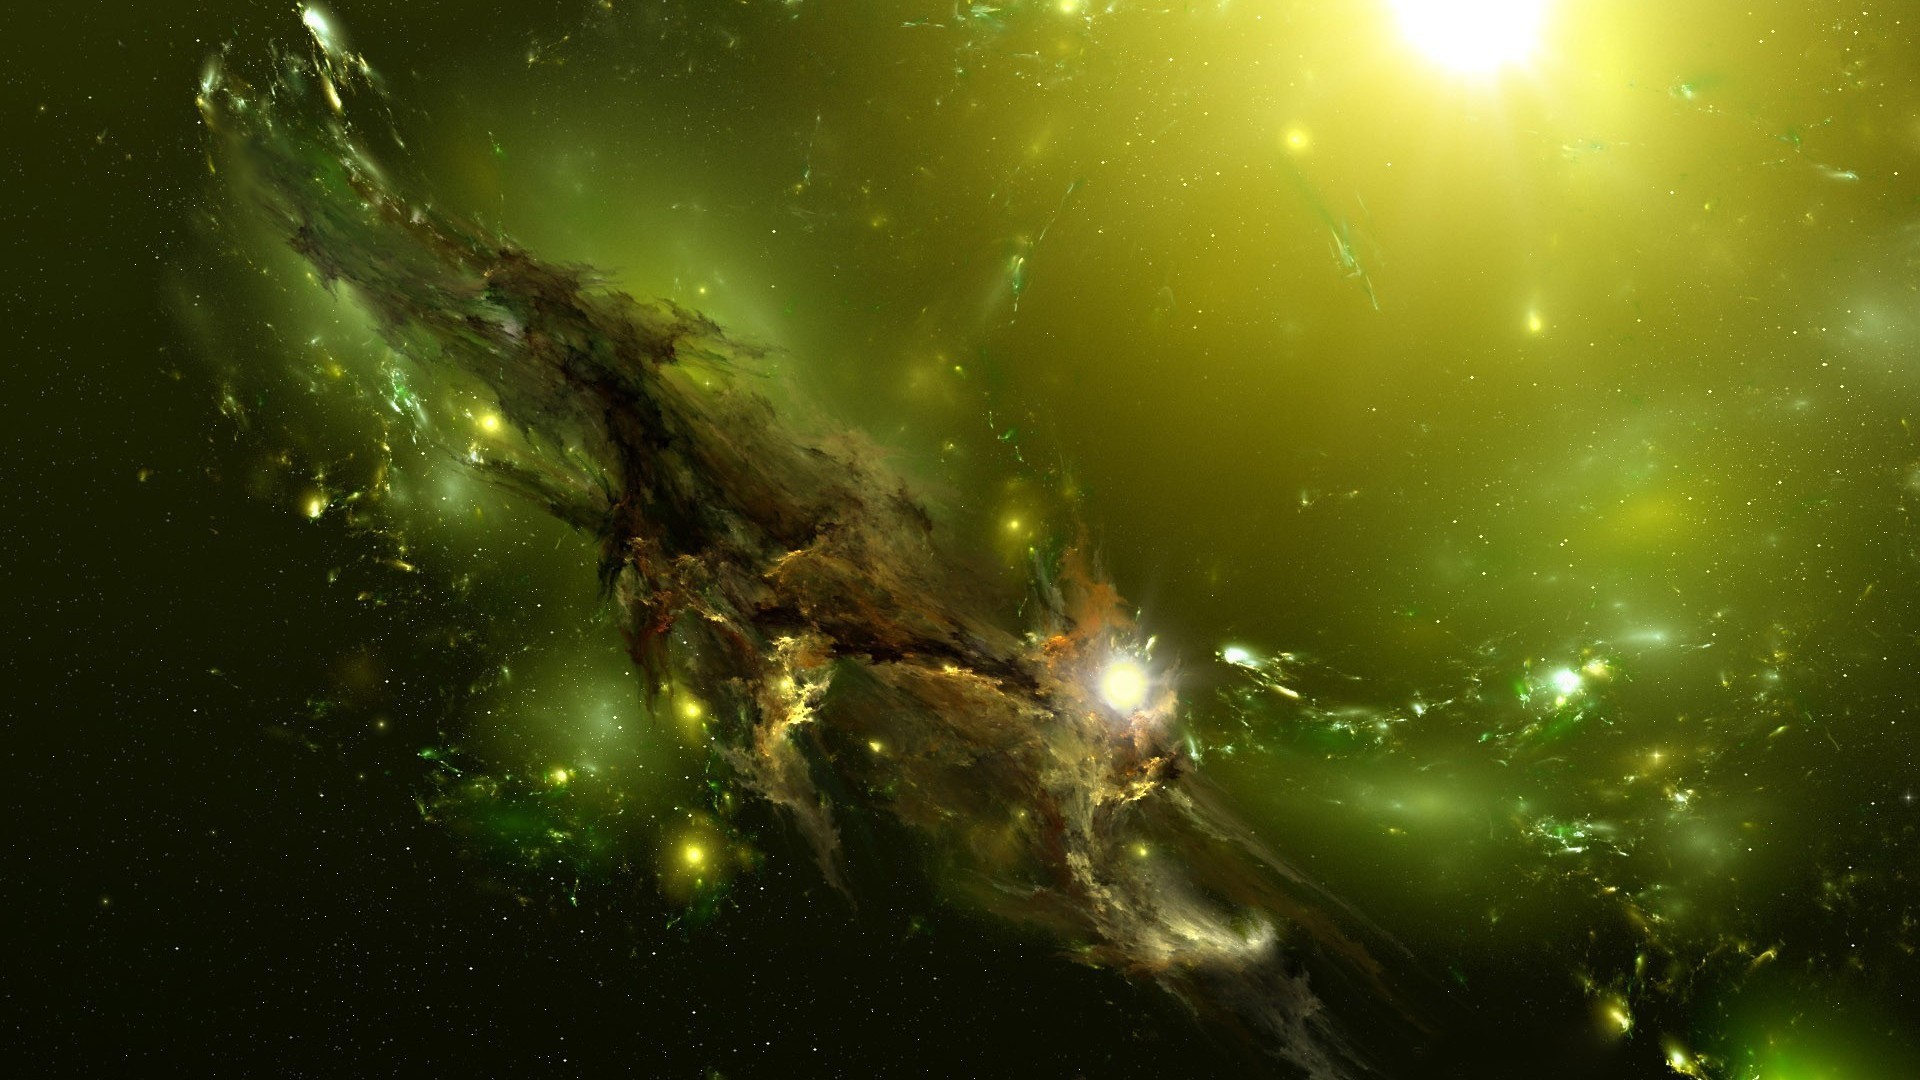 Wallpaper Wiki Nebula 1920x1080 Space Background Pic Wpd008484 1920x1080